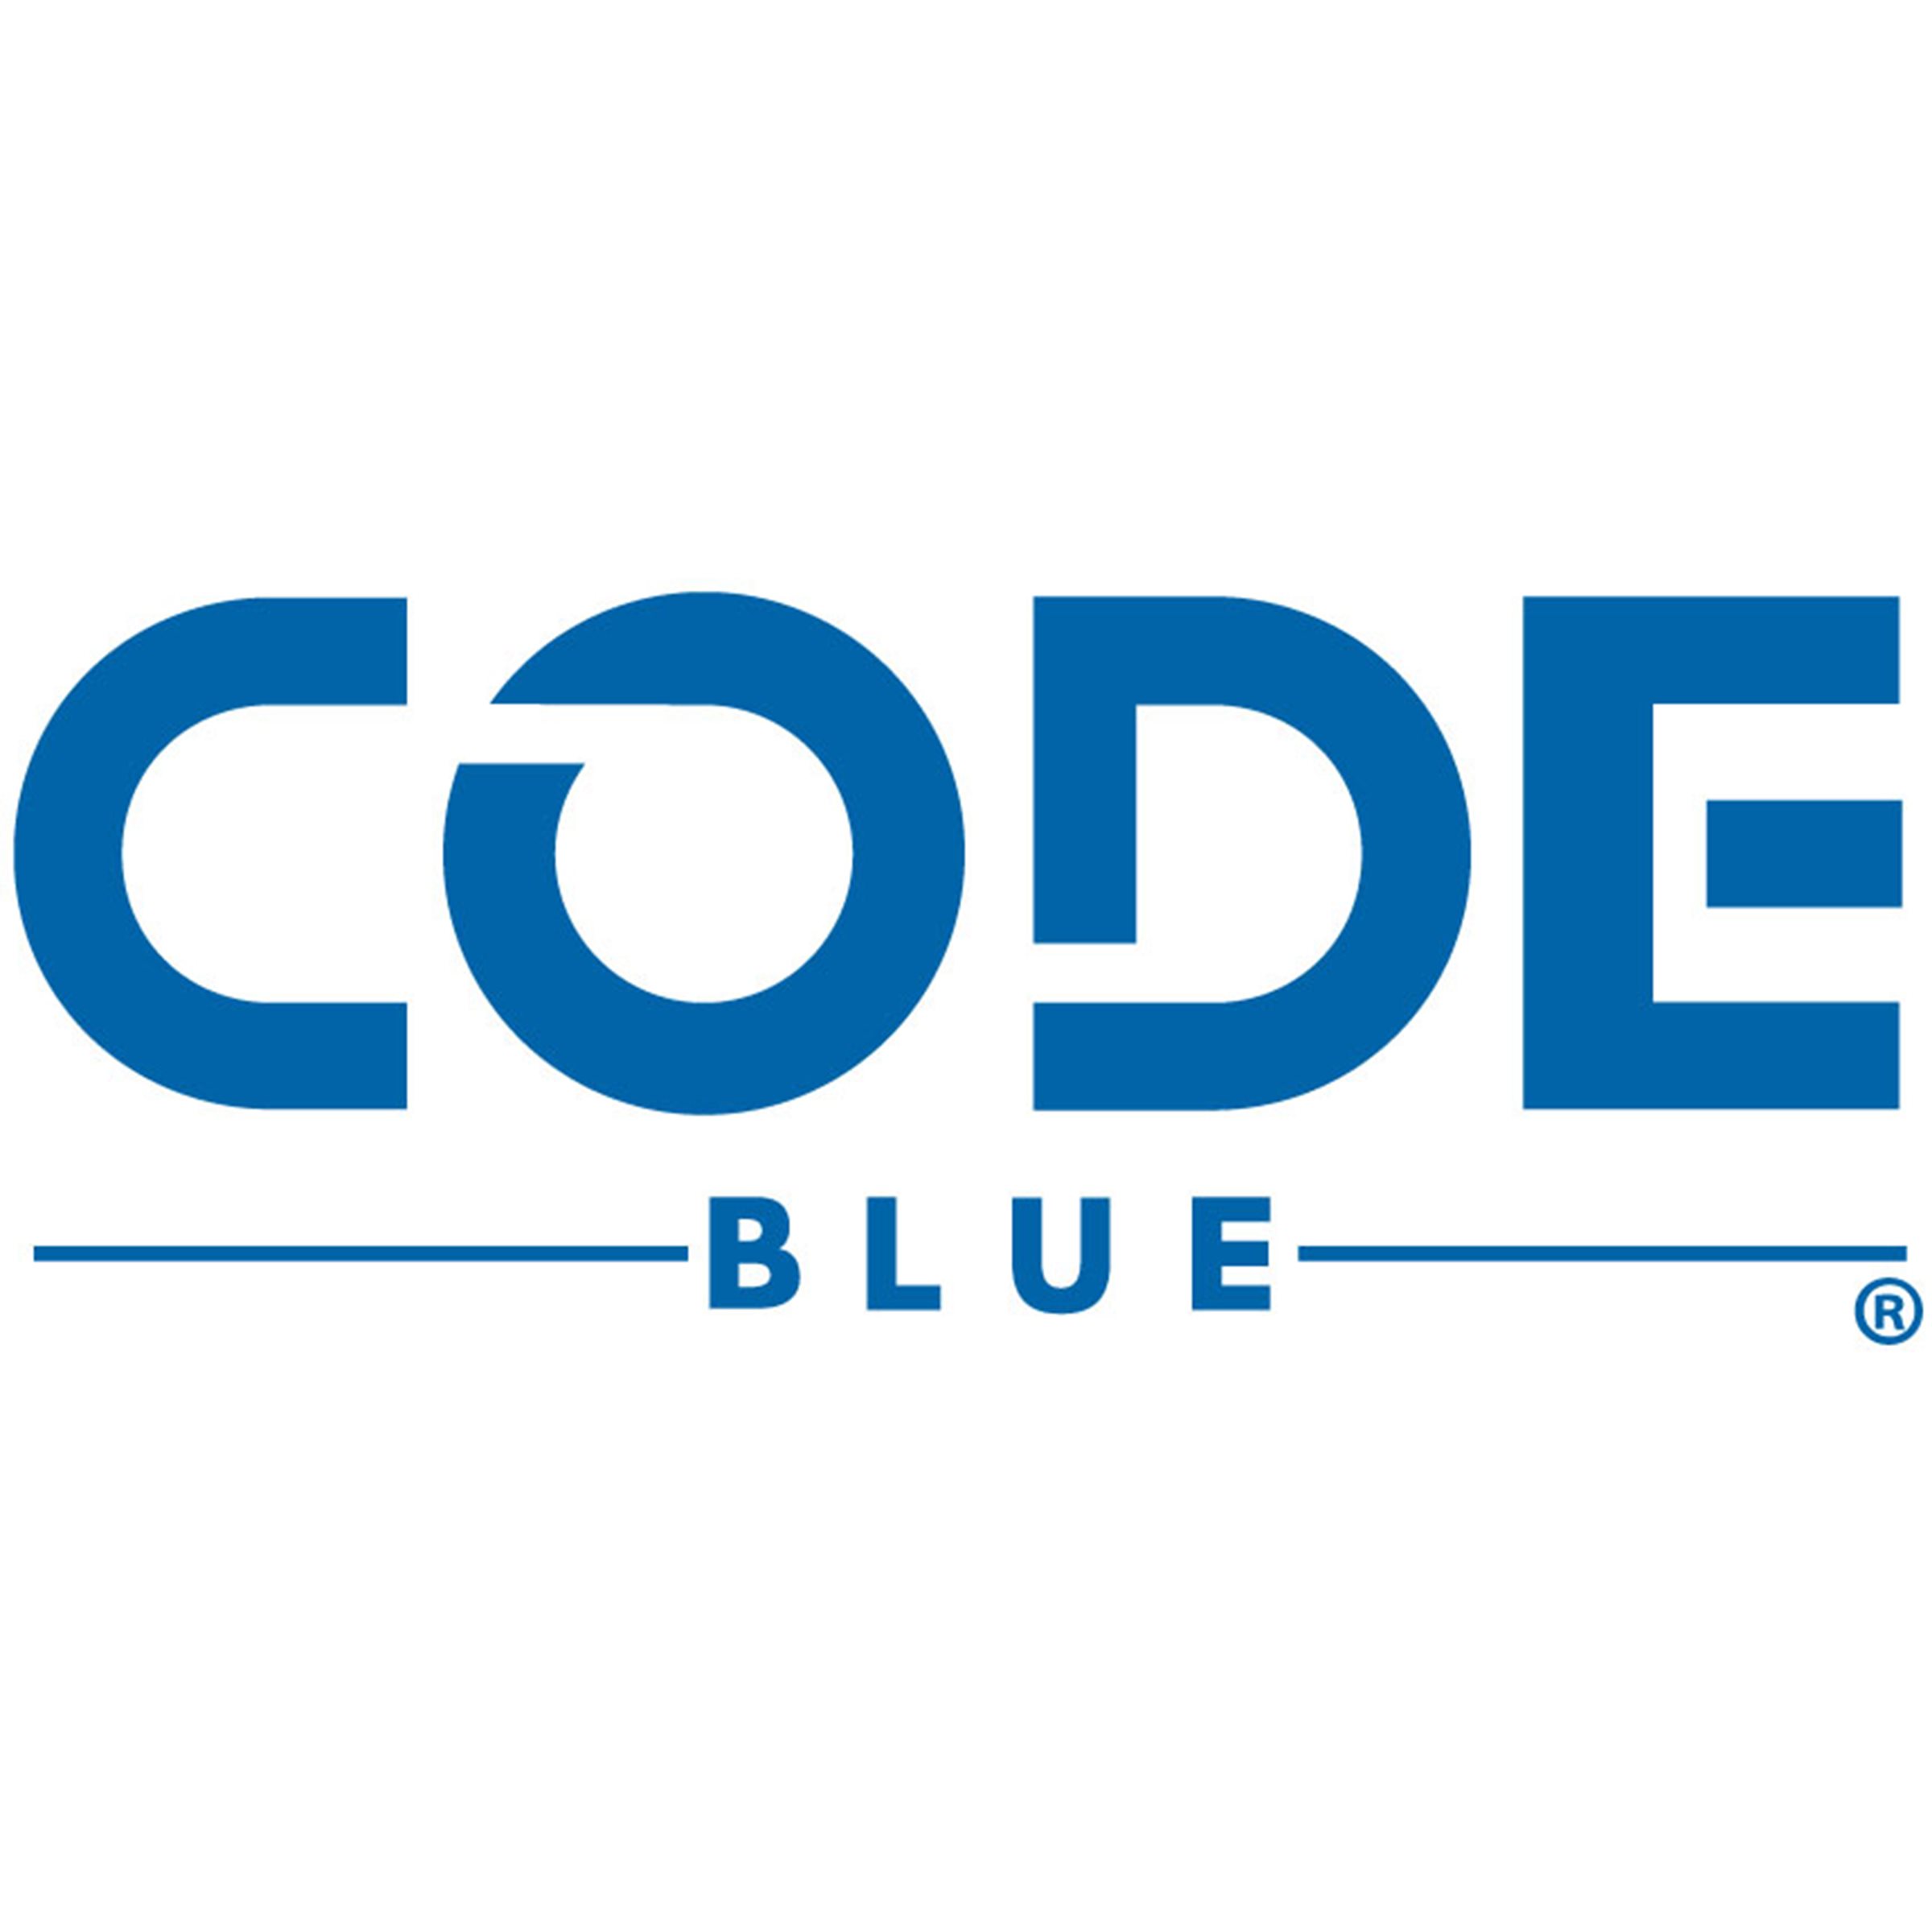 A_CodeBlue